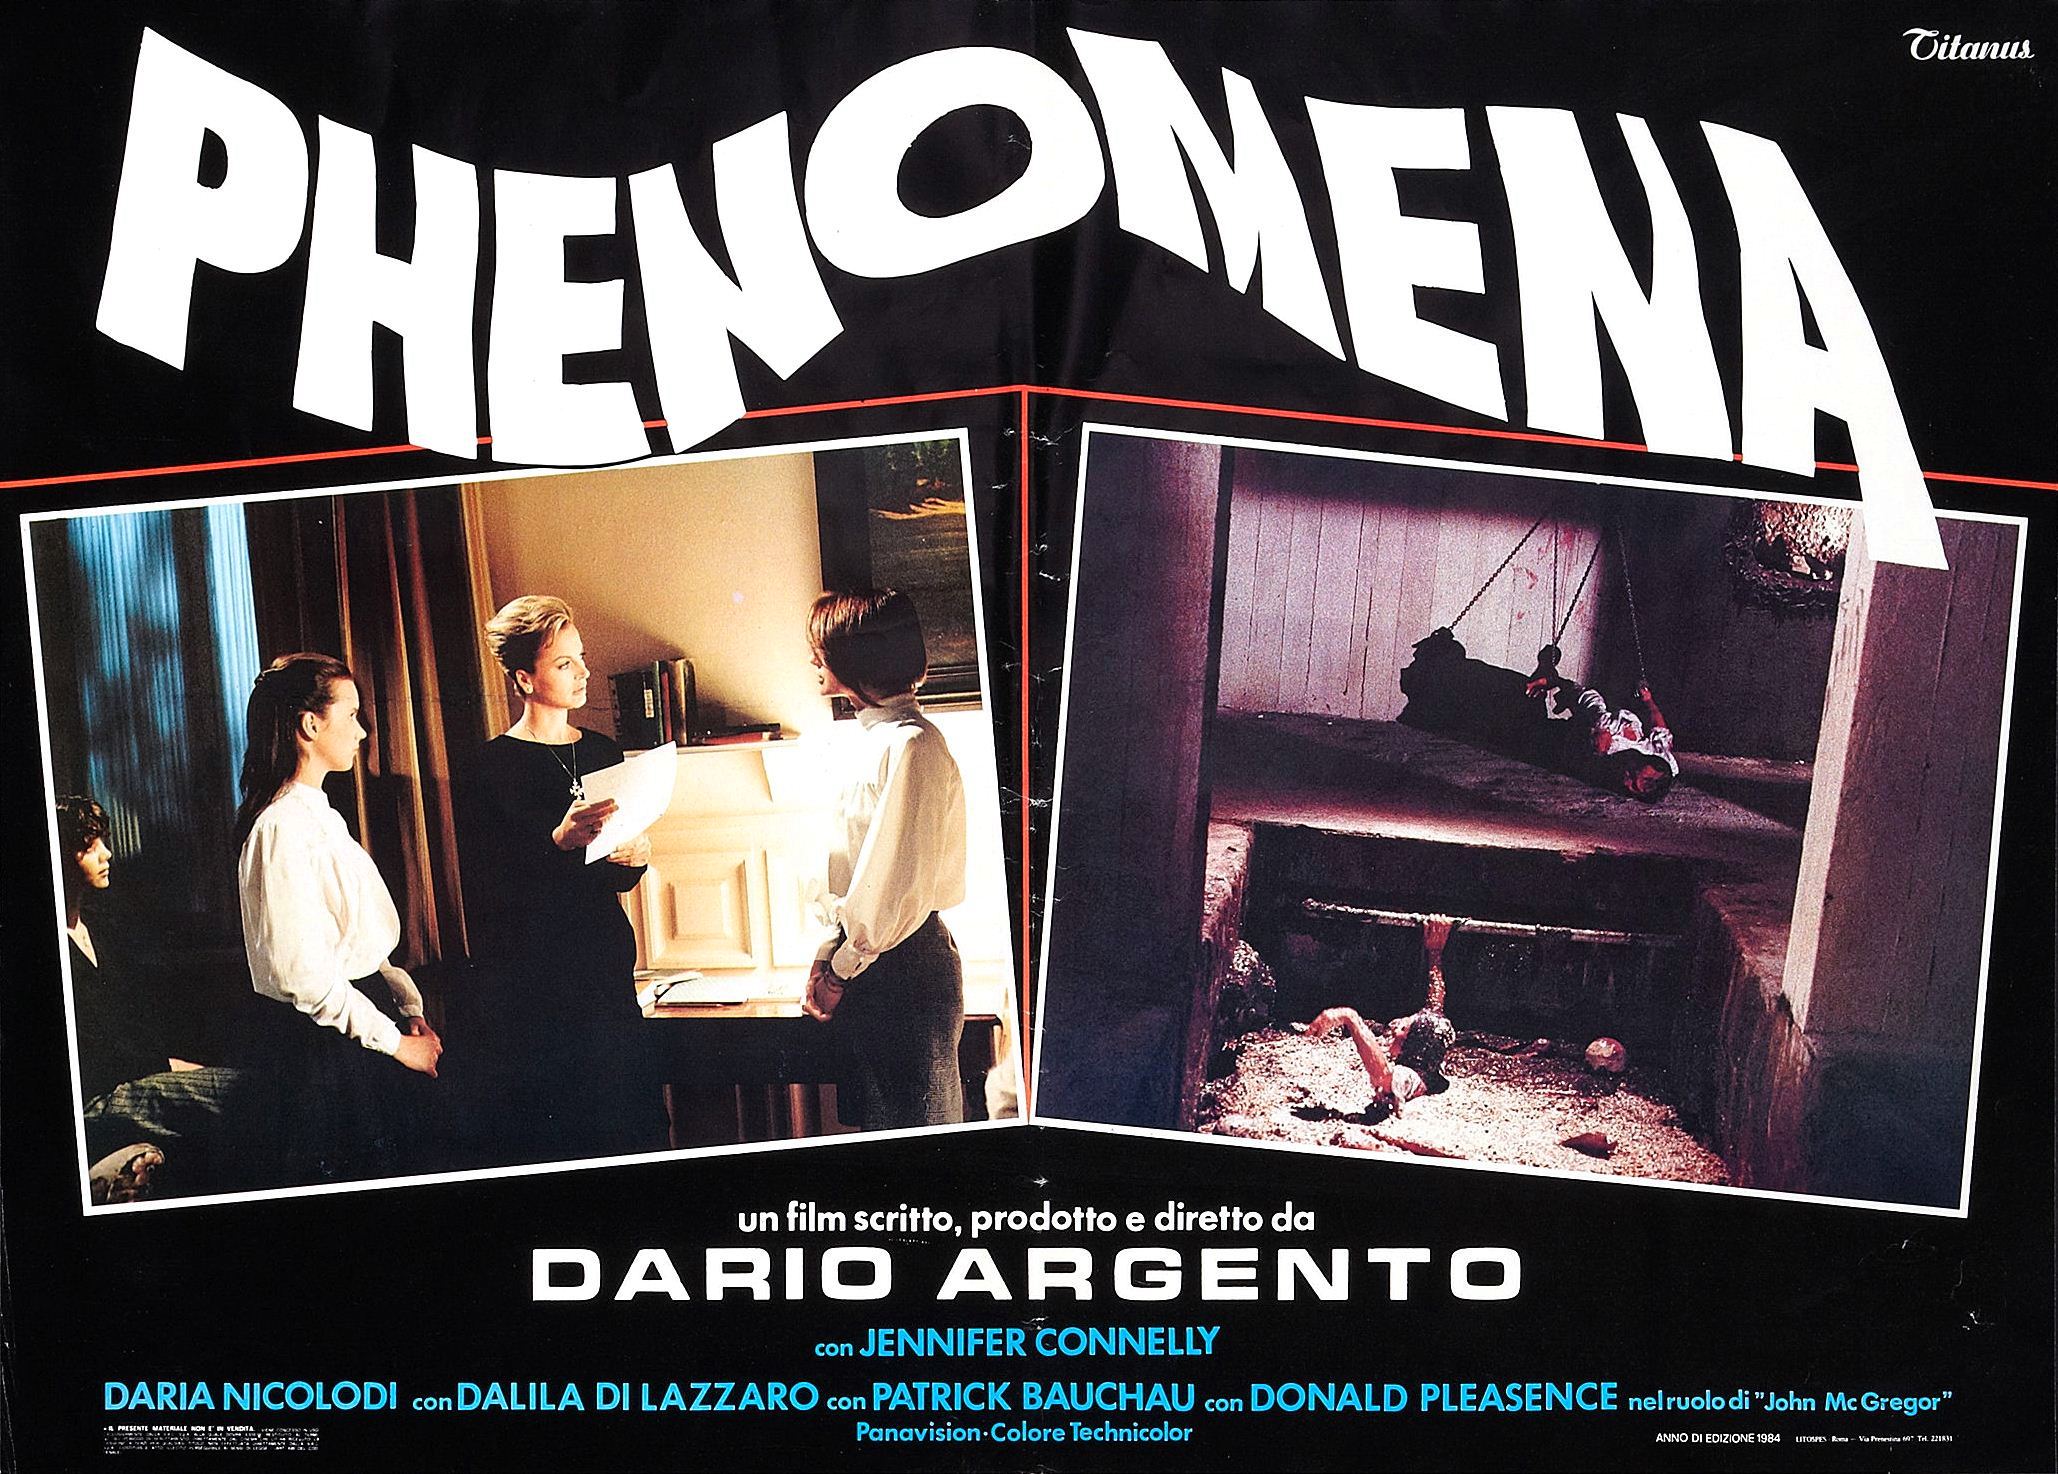 Dario Argento'nun Phenomena Galerisi 6 – phenomena fb 03